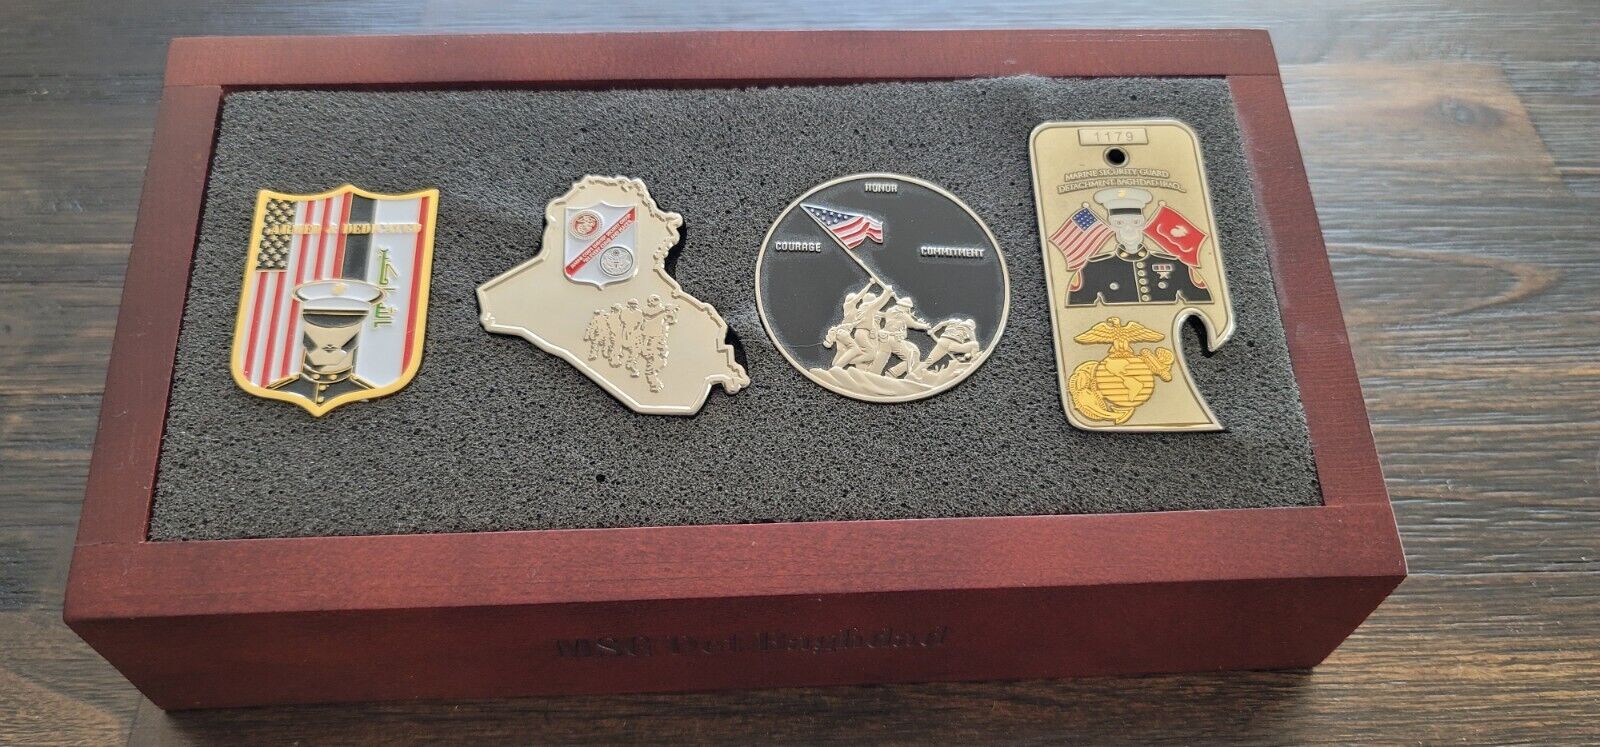 USMC MSG Det Baghdad challenge coin set (4) with rare wooden display case